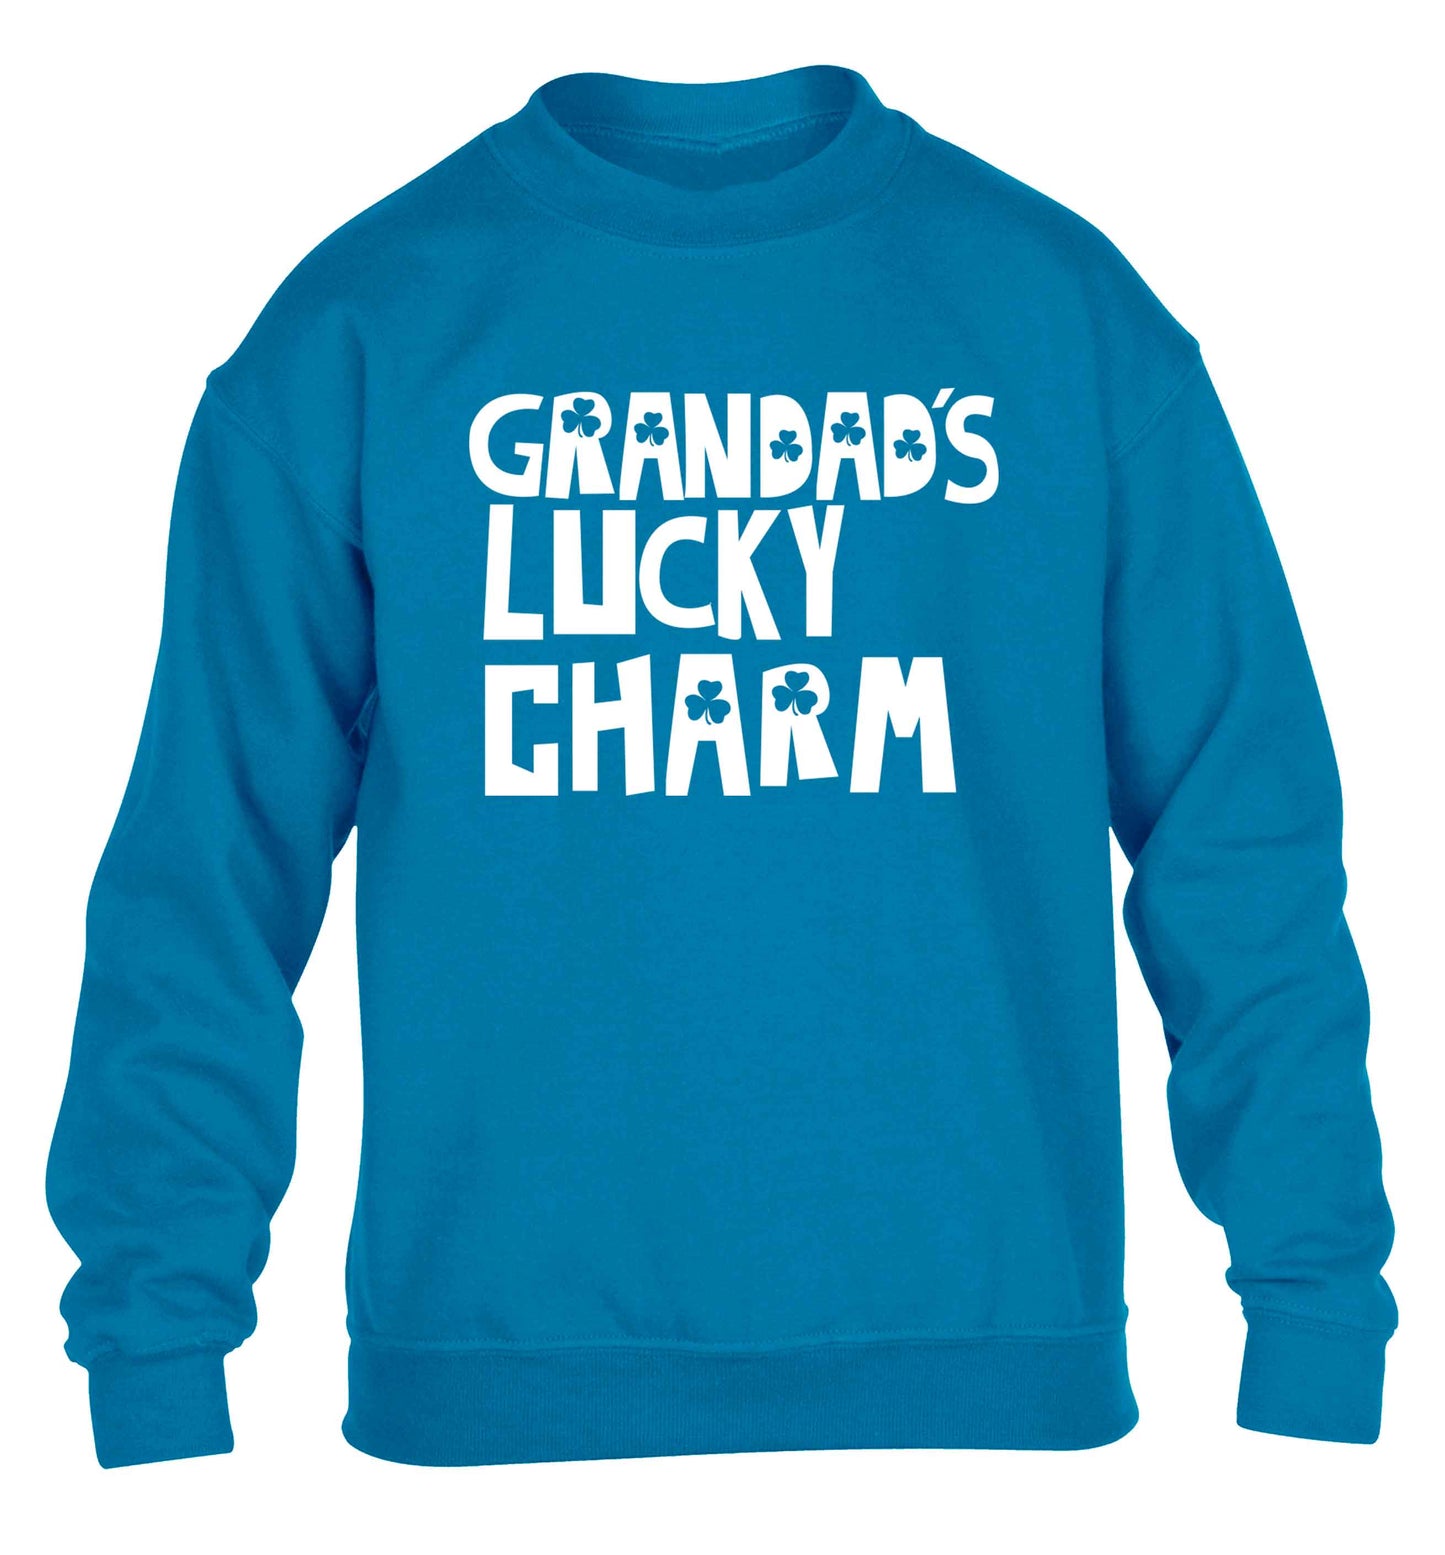 Grandad's lucky charm  children's blue sweater 12-13 Years